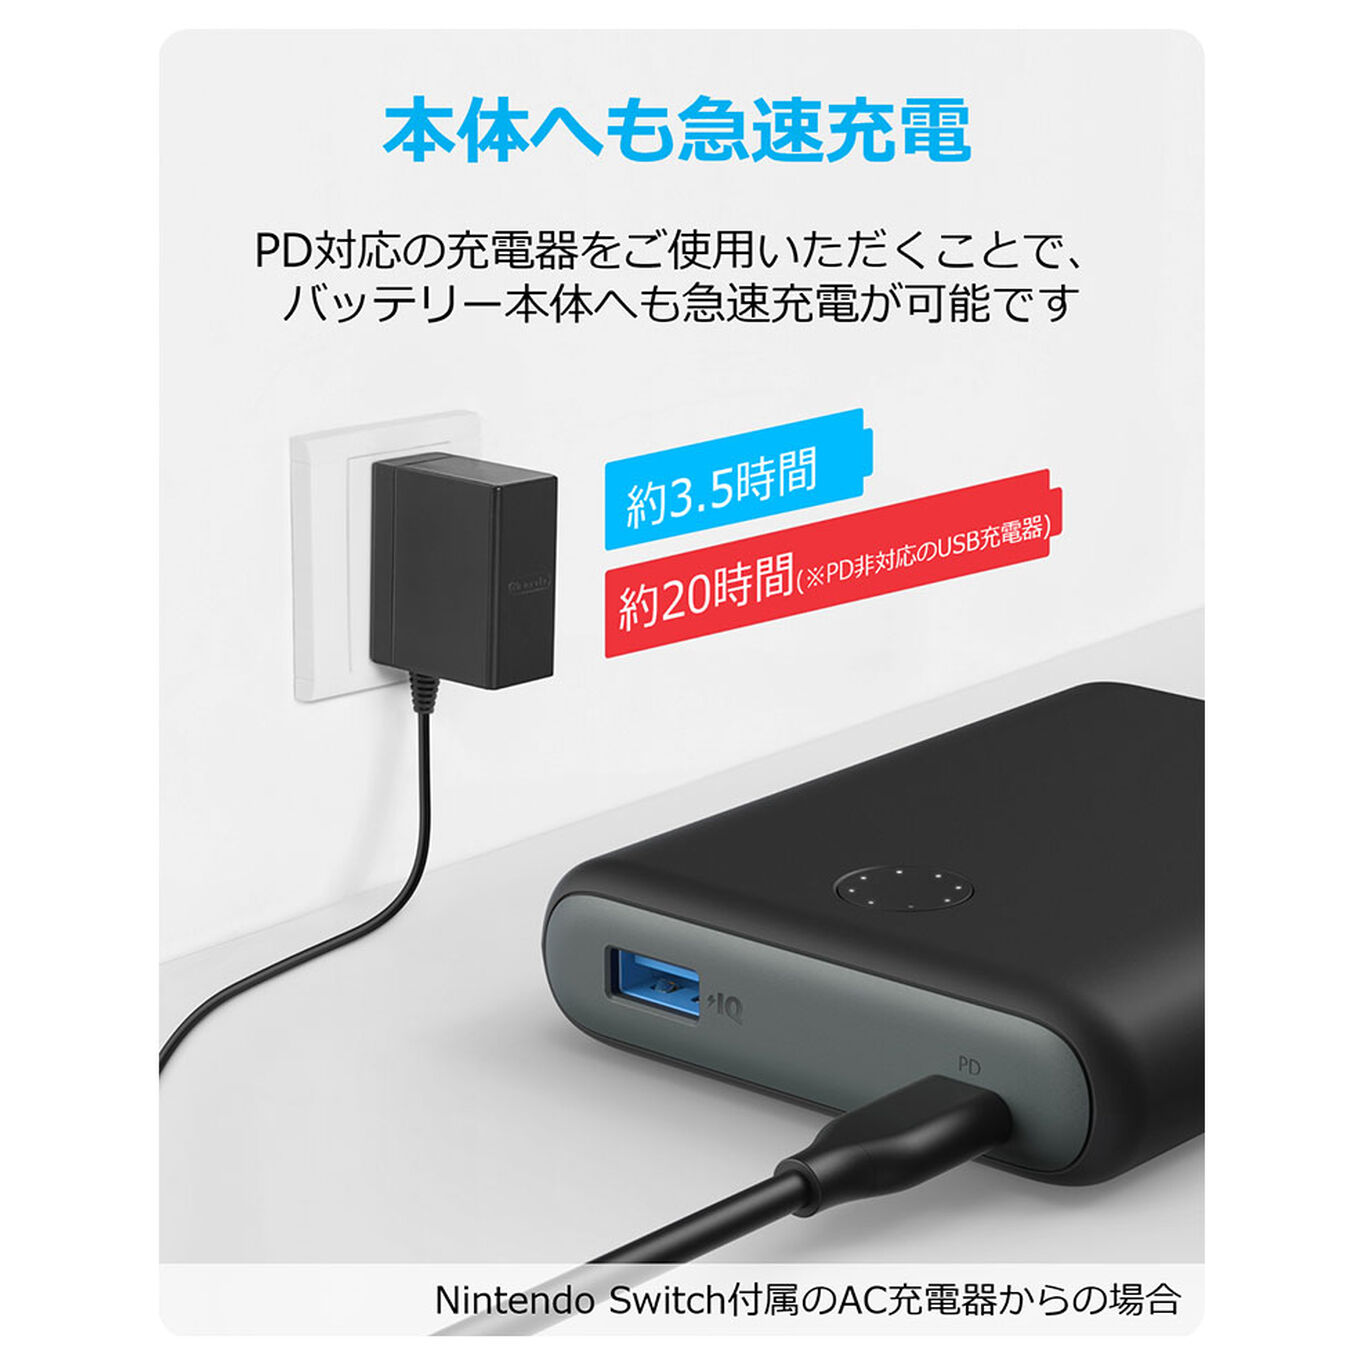 Anker Powercore Nintendo Switch Edition My Nintendo Store マイニンテンドーストア